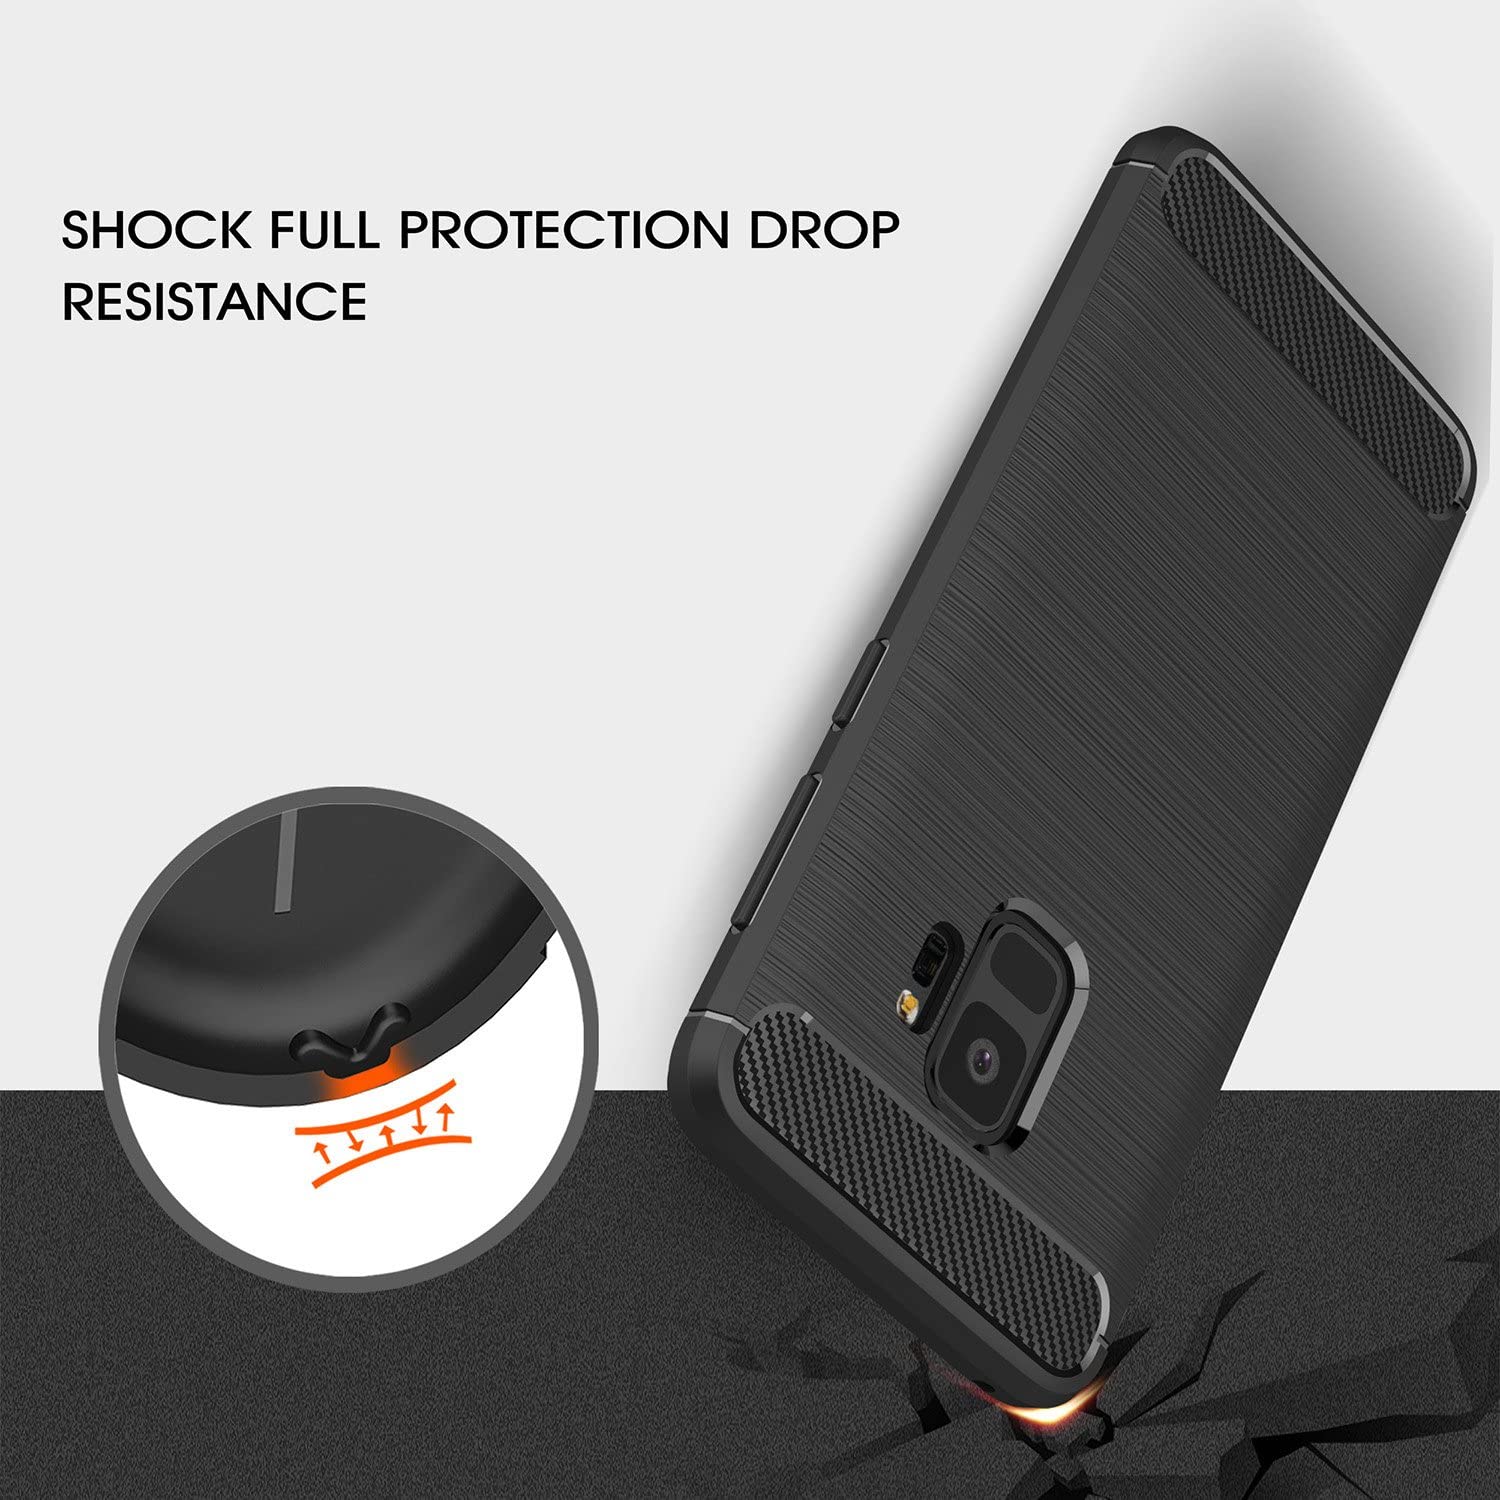 Shockproof Silicone Carbon Fiber Fibre Case Cover For Samsung Note 10 Lite